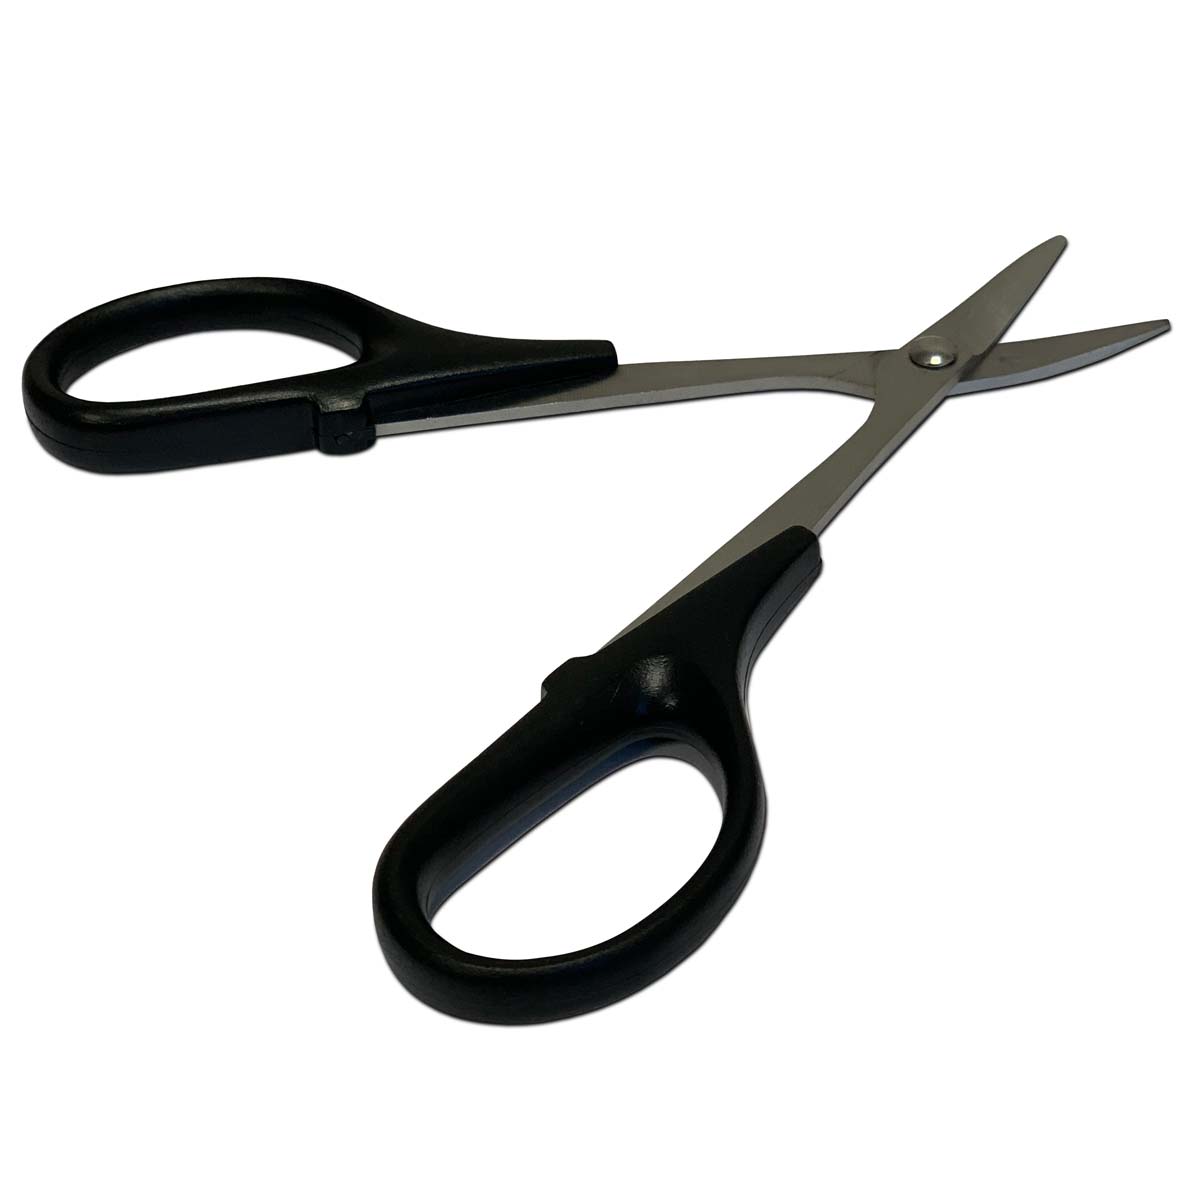 GEWO Rubber Scissors